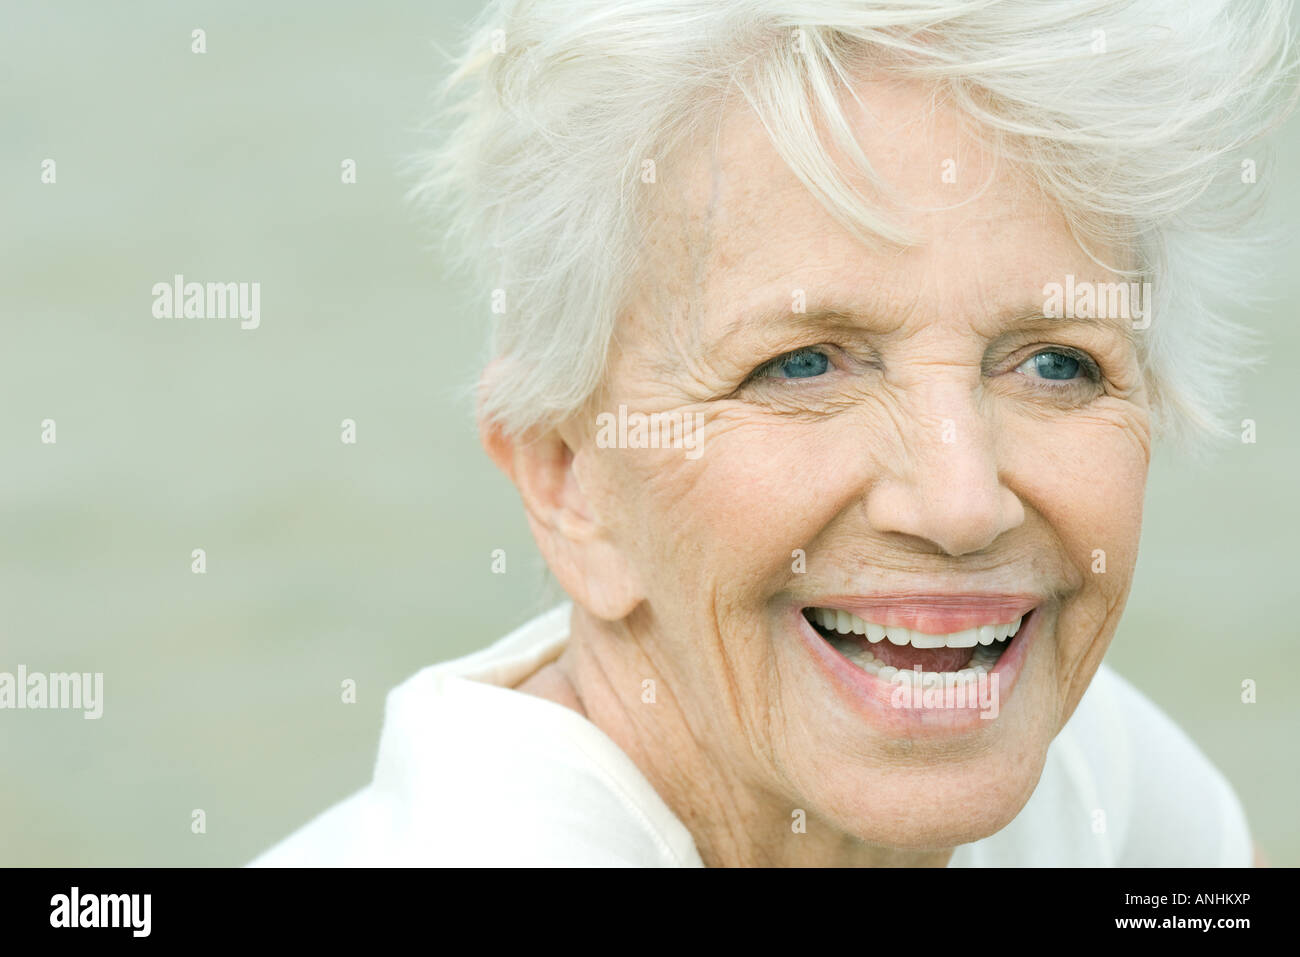 Senior woman smiling, looking away, portrait Stock Photo